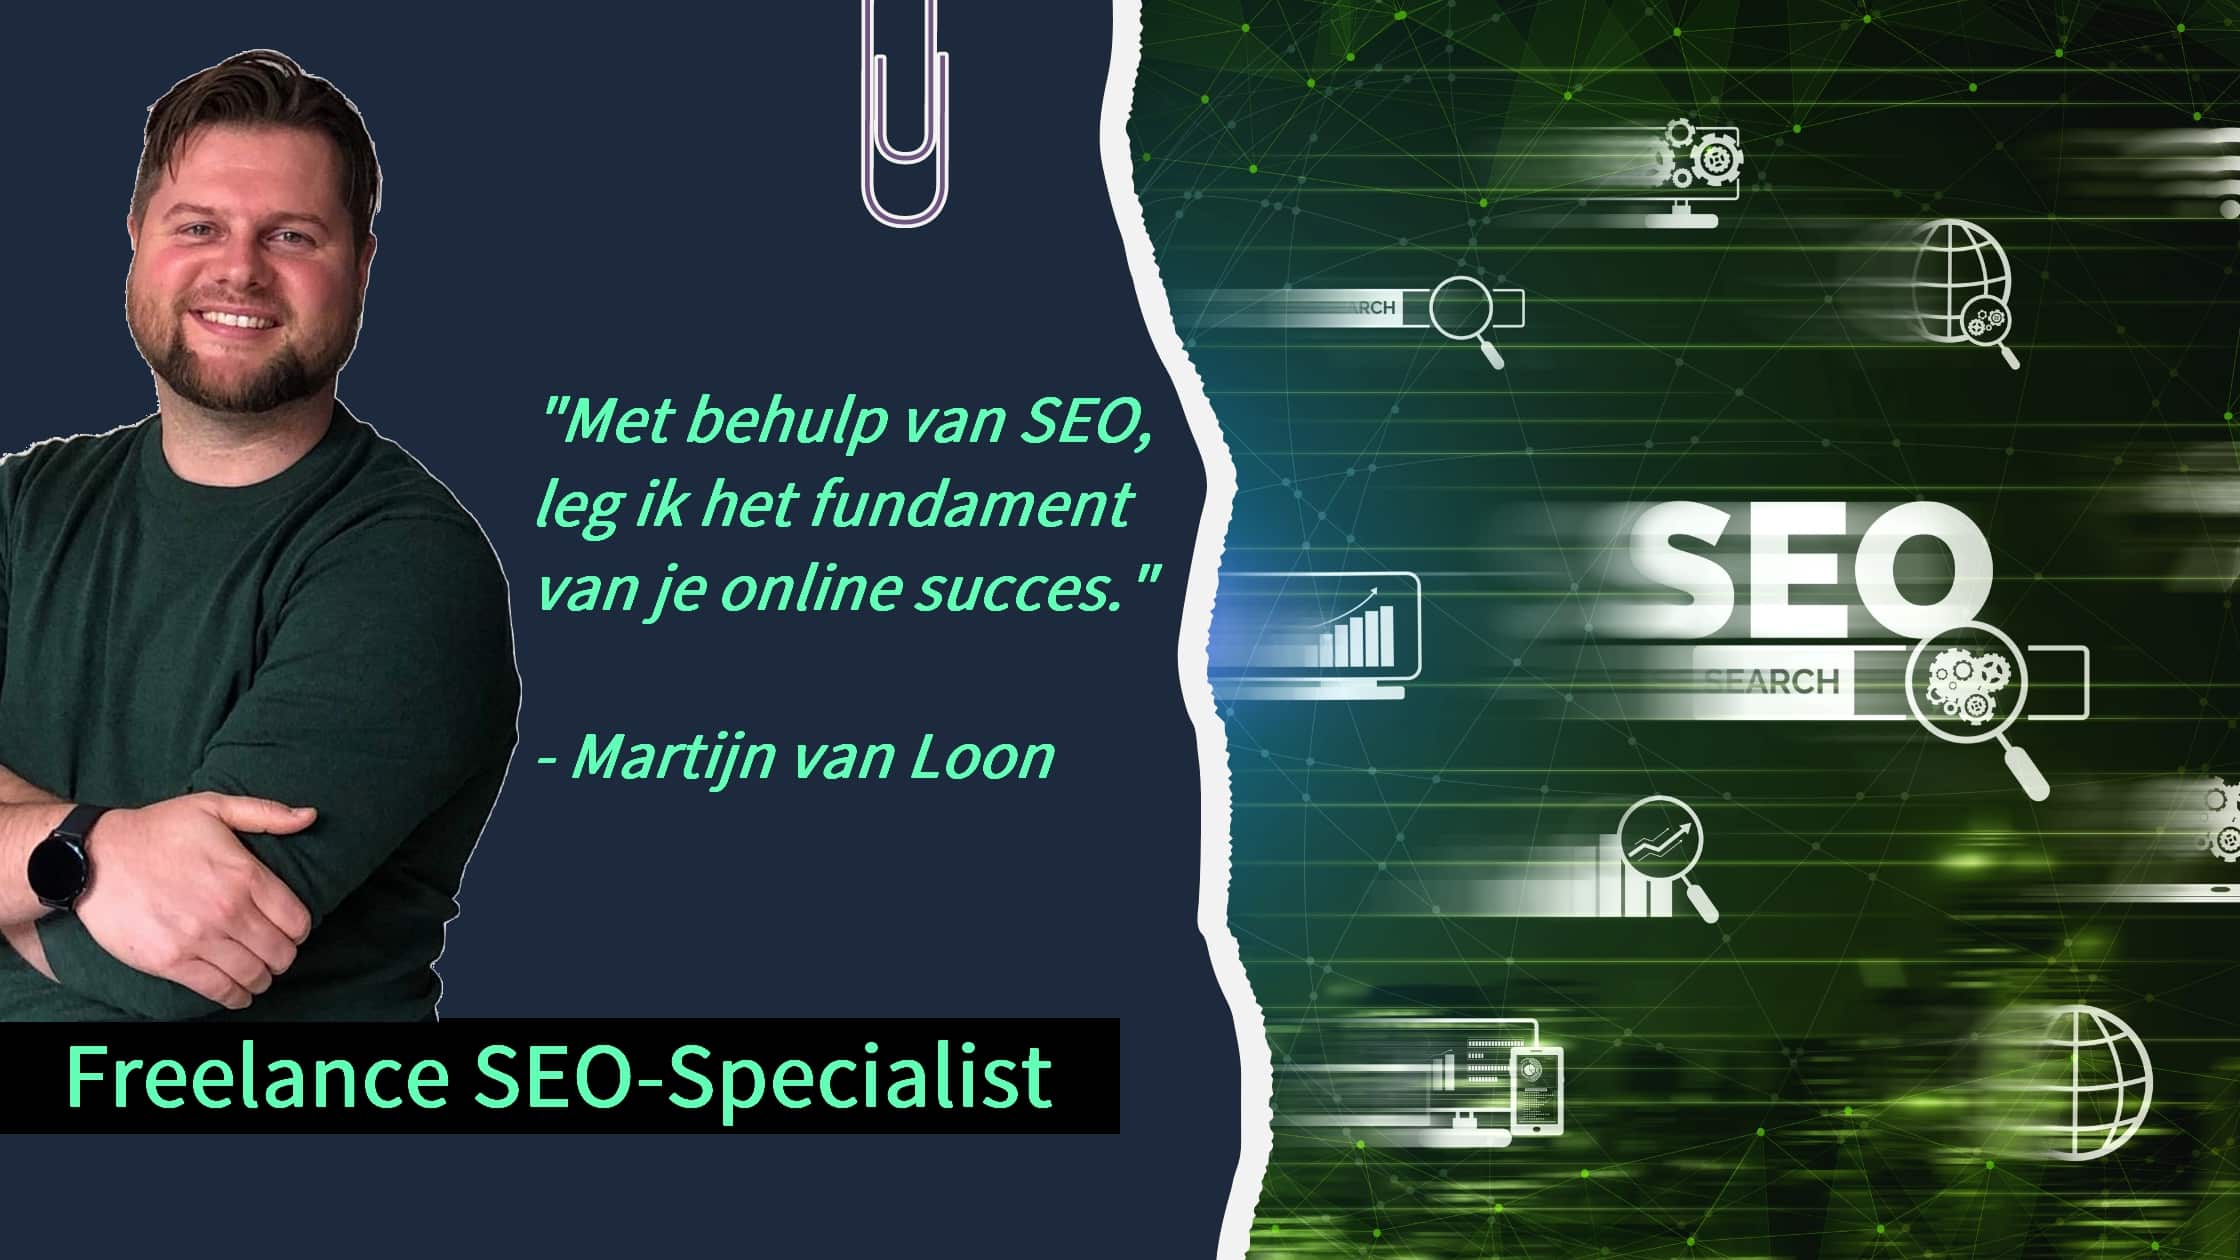 Freelance SEO-Specialist - Martijn van Loon